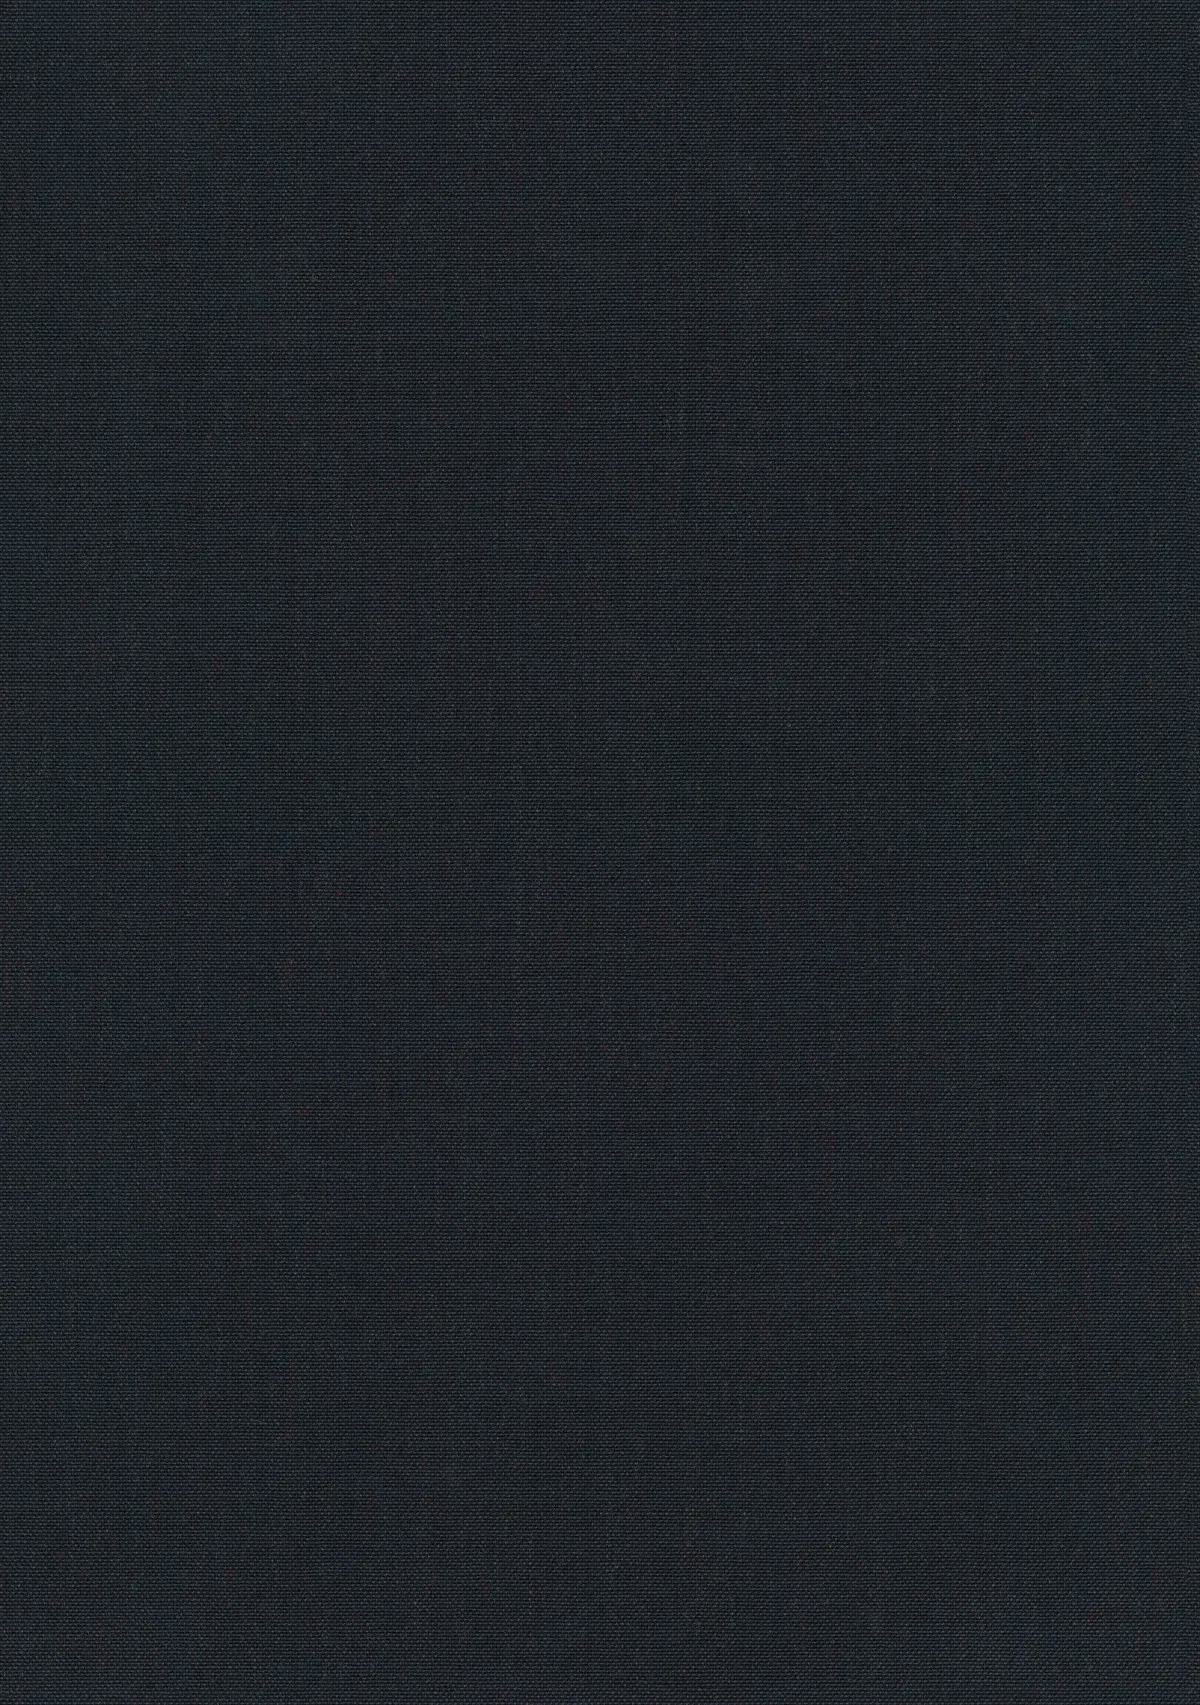 Fabric sample Remix 3 796 blue